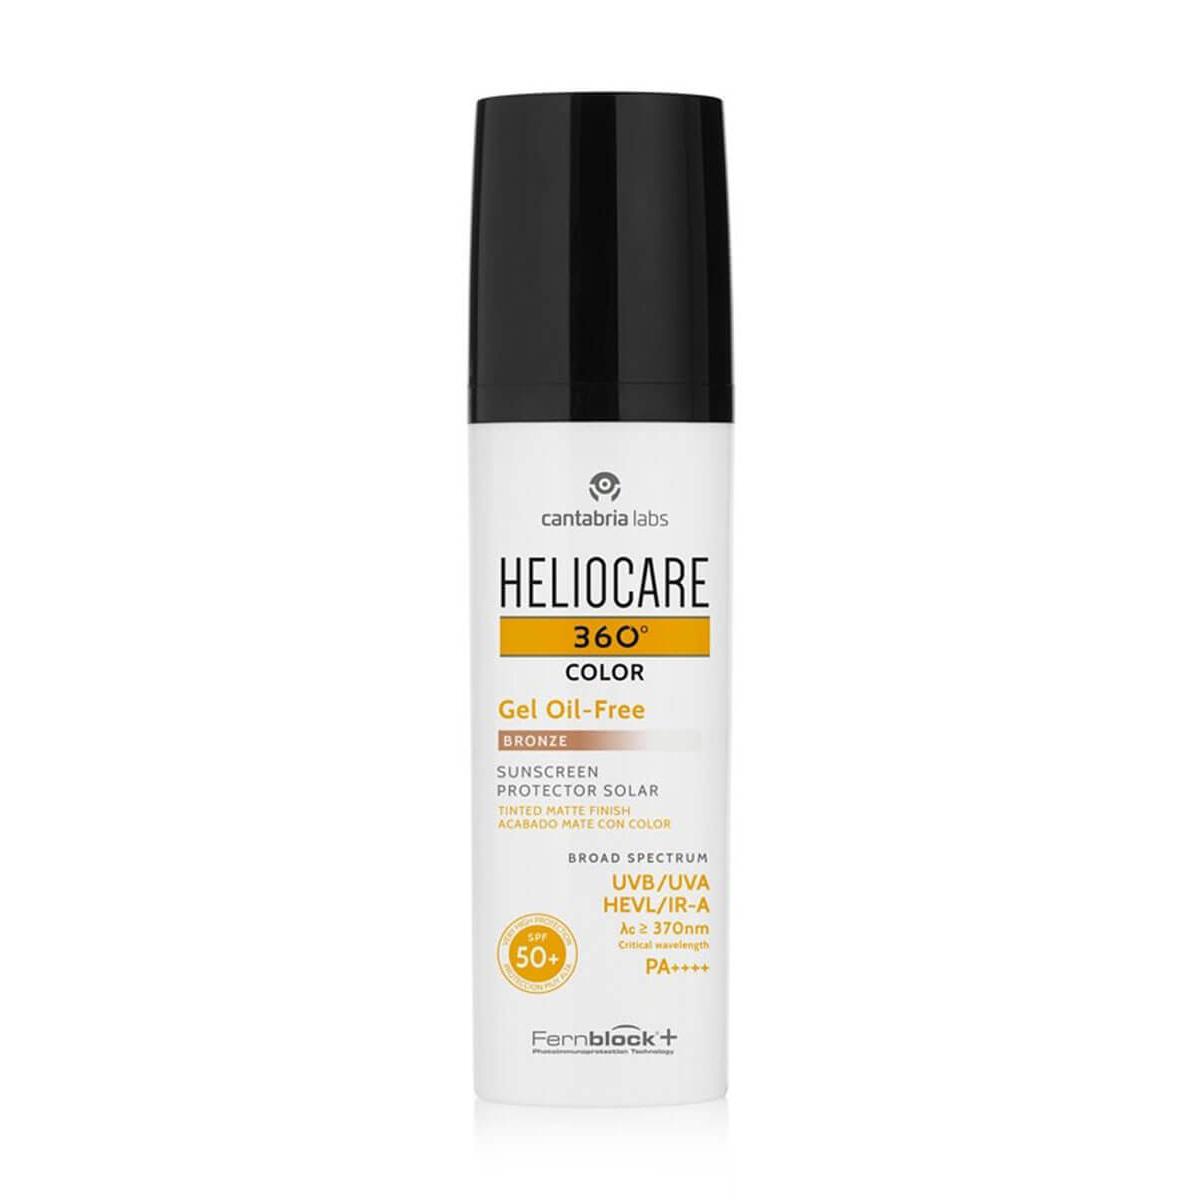 Heliocare - Heliocare 360º gel oil free color bronze spf 50+ 50ml